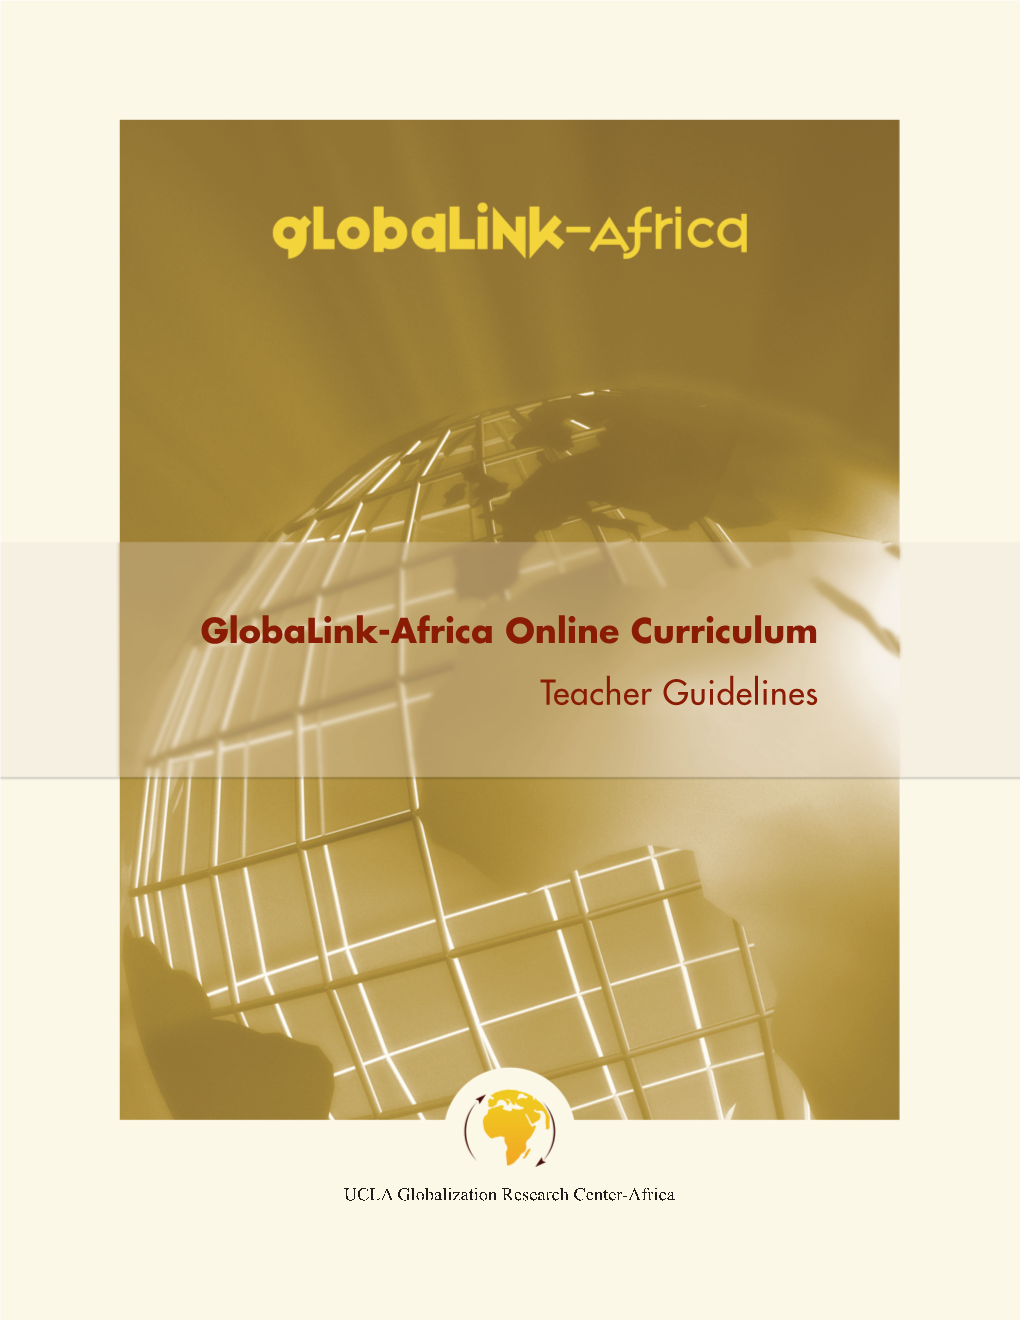 Globalink-Africa Online Curriculum Teacher Guidelines